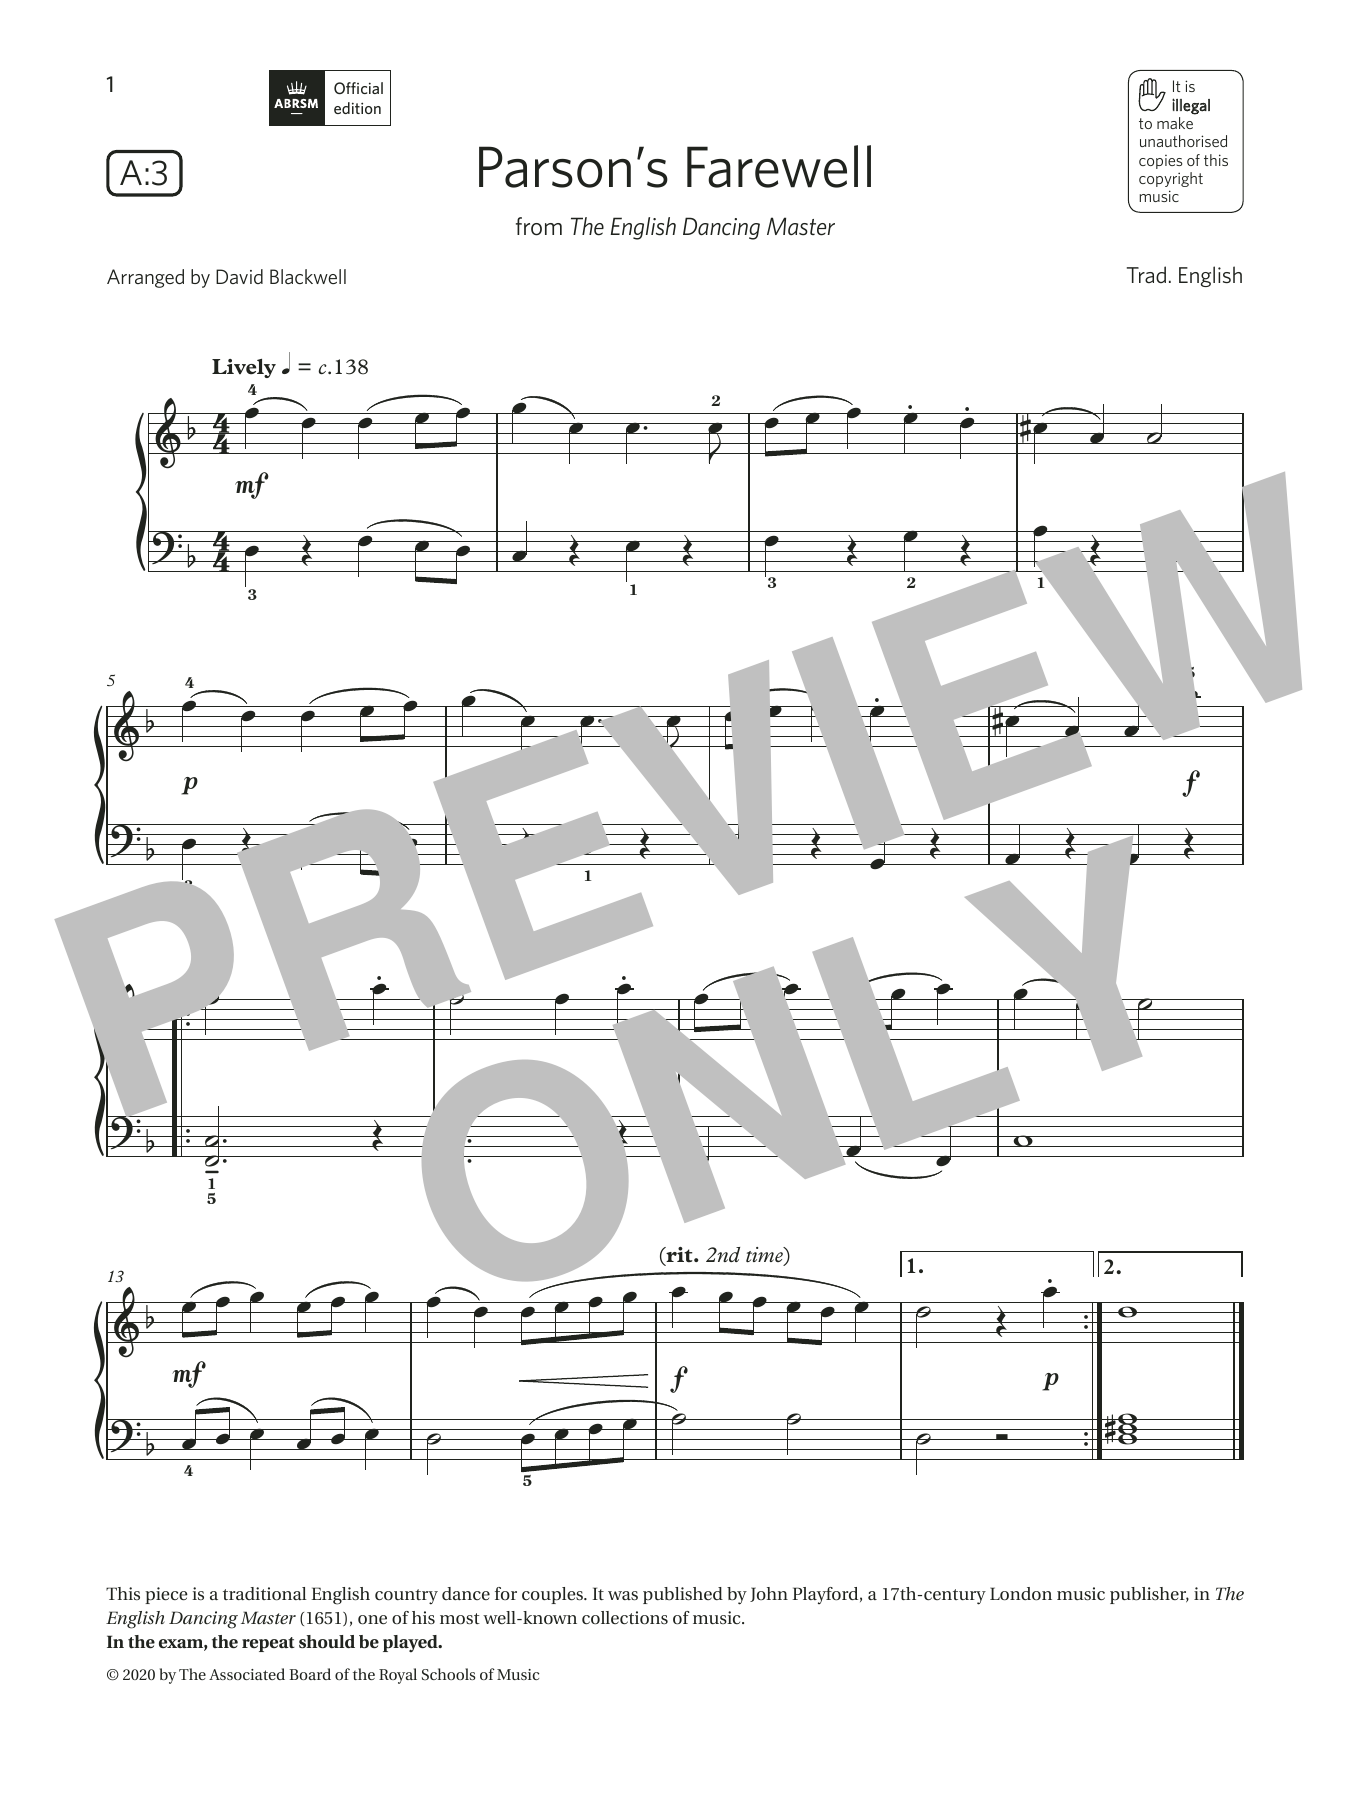 Download Trad. English Parson's Farewell (Grade 1, list A3, fr Sheet Music